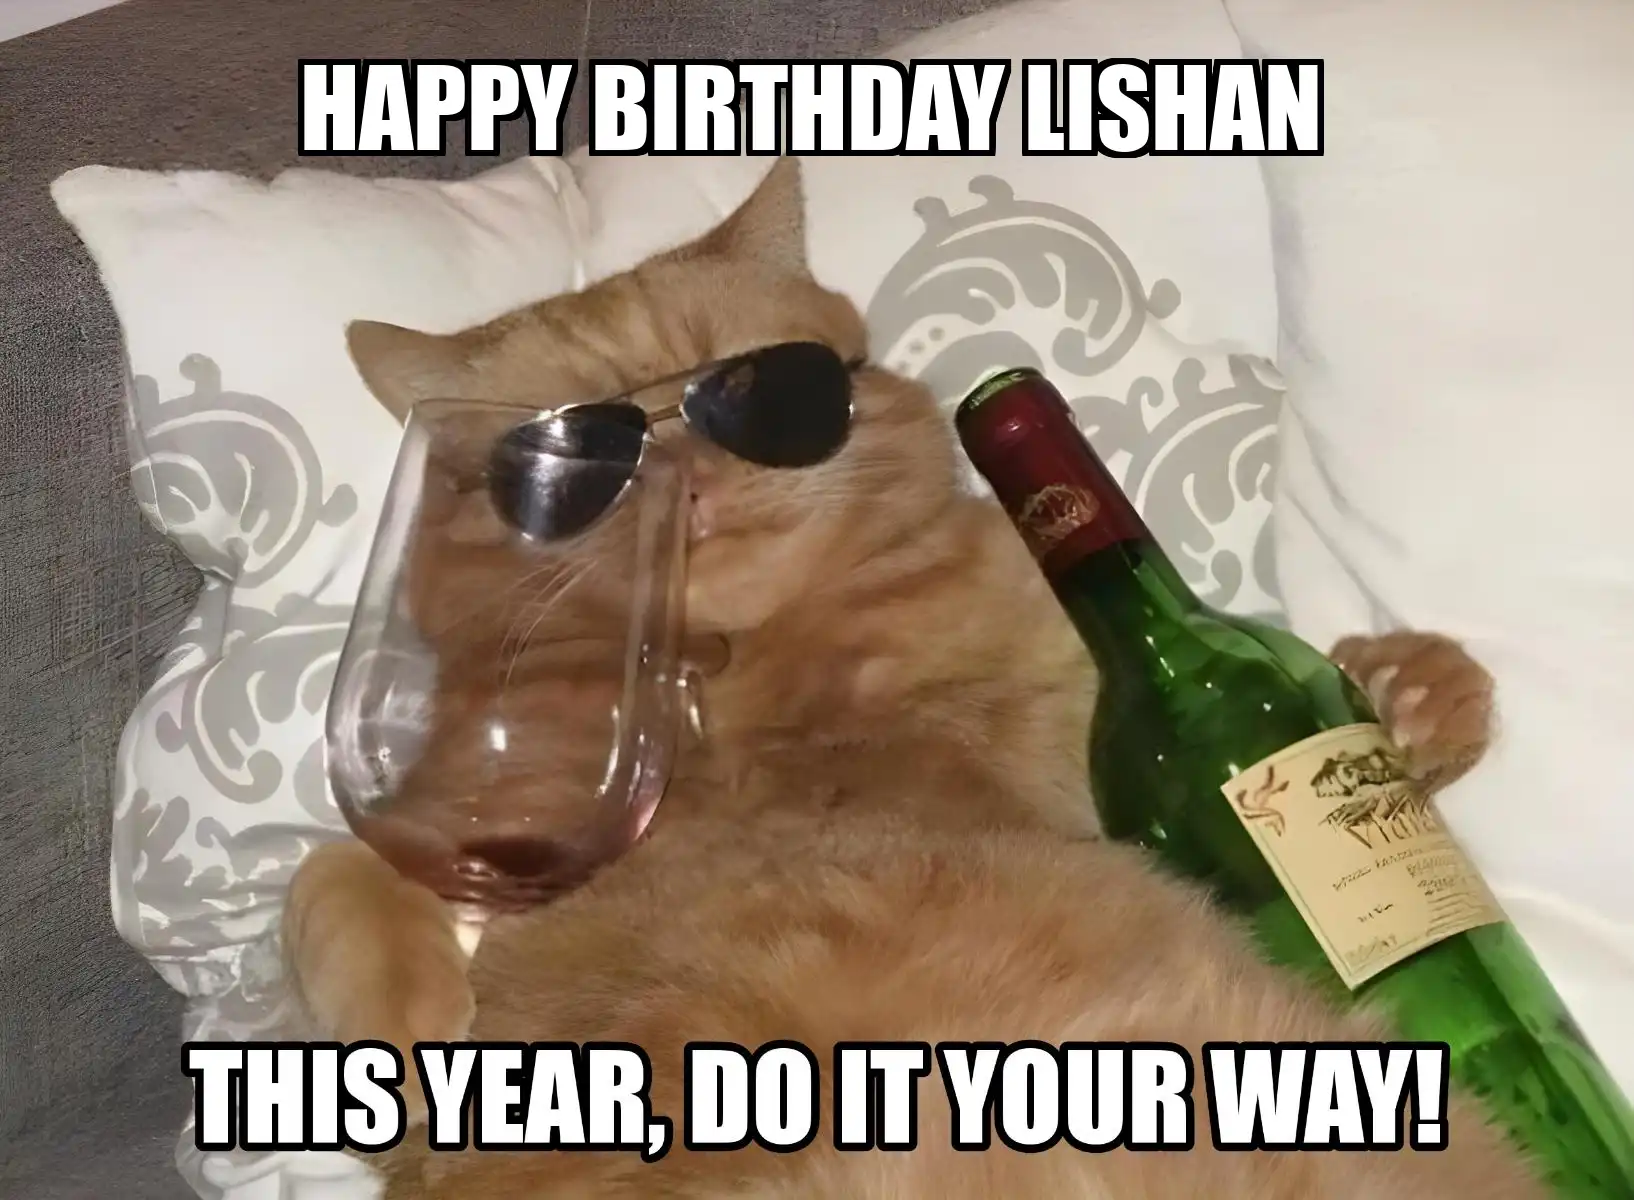 Happy Birthday Lishan This Year Do It Your Way Meme